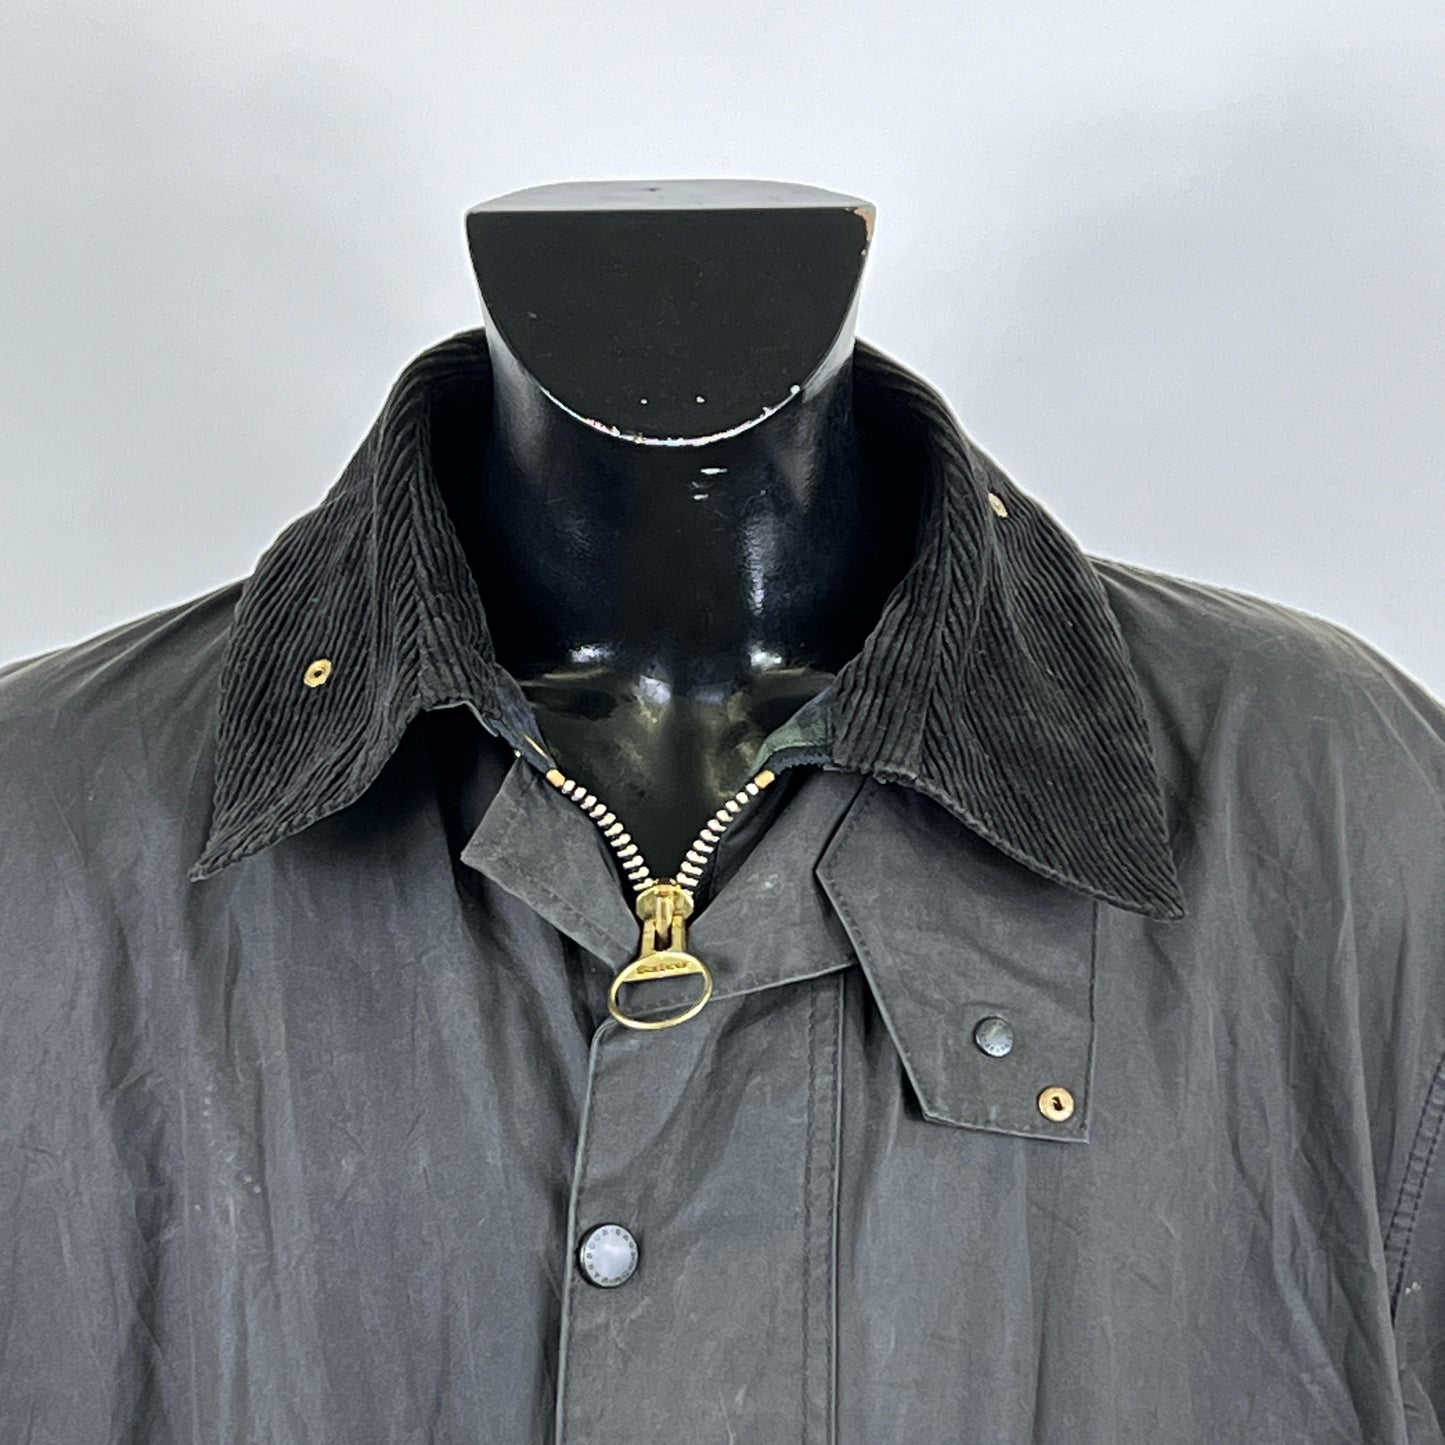 Barbour Giacca Border Nero Vintage Uomo Cerata C50/127 cm - Black wax coat size XXL